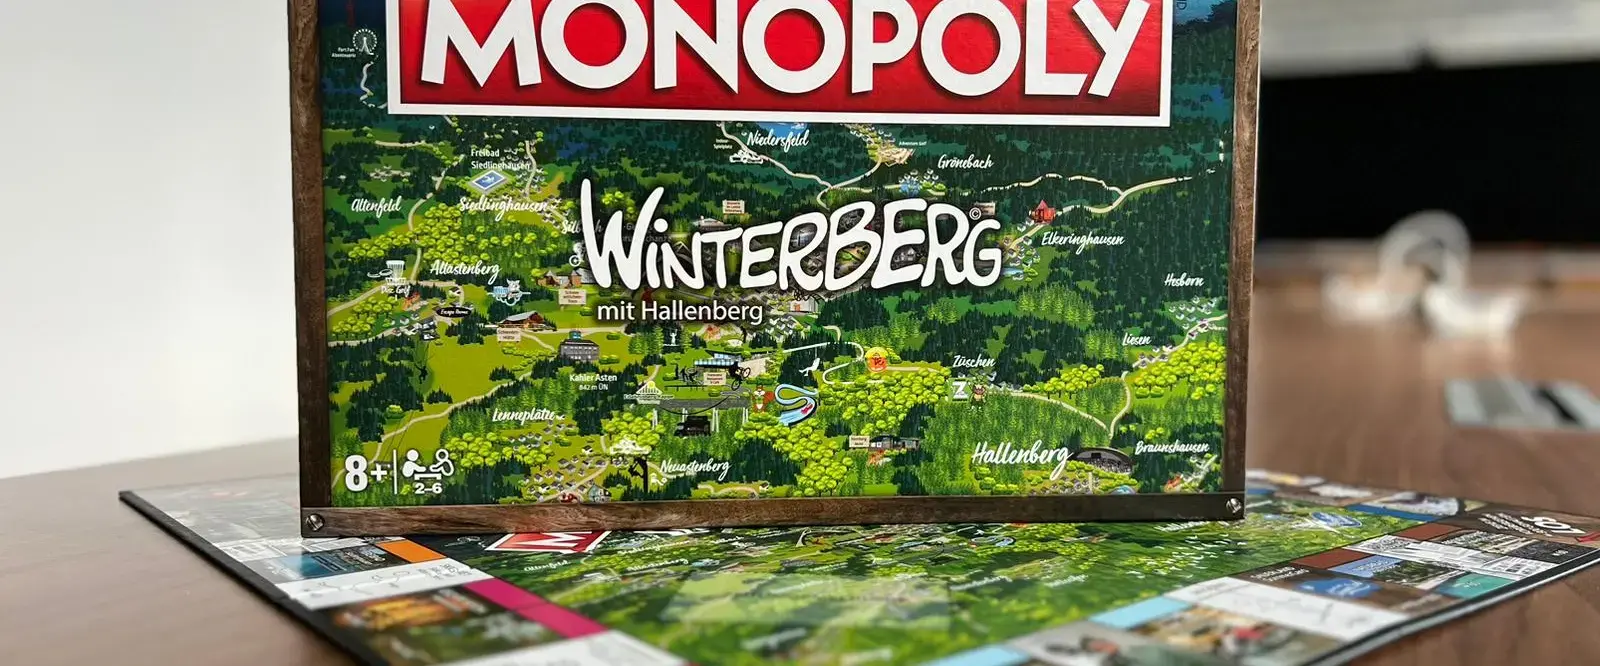 Das Winterberg Monopoly Spiel.